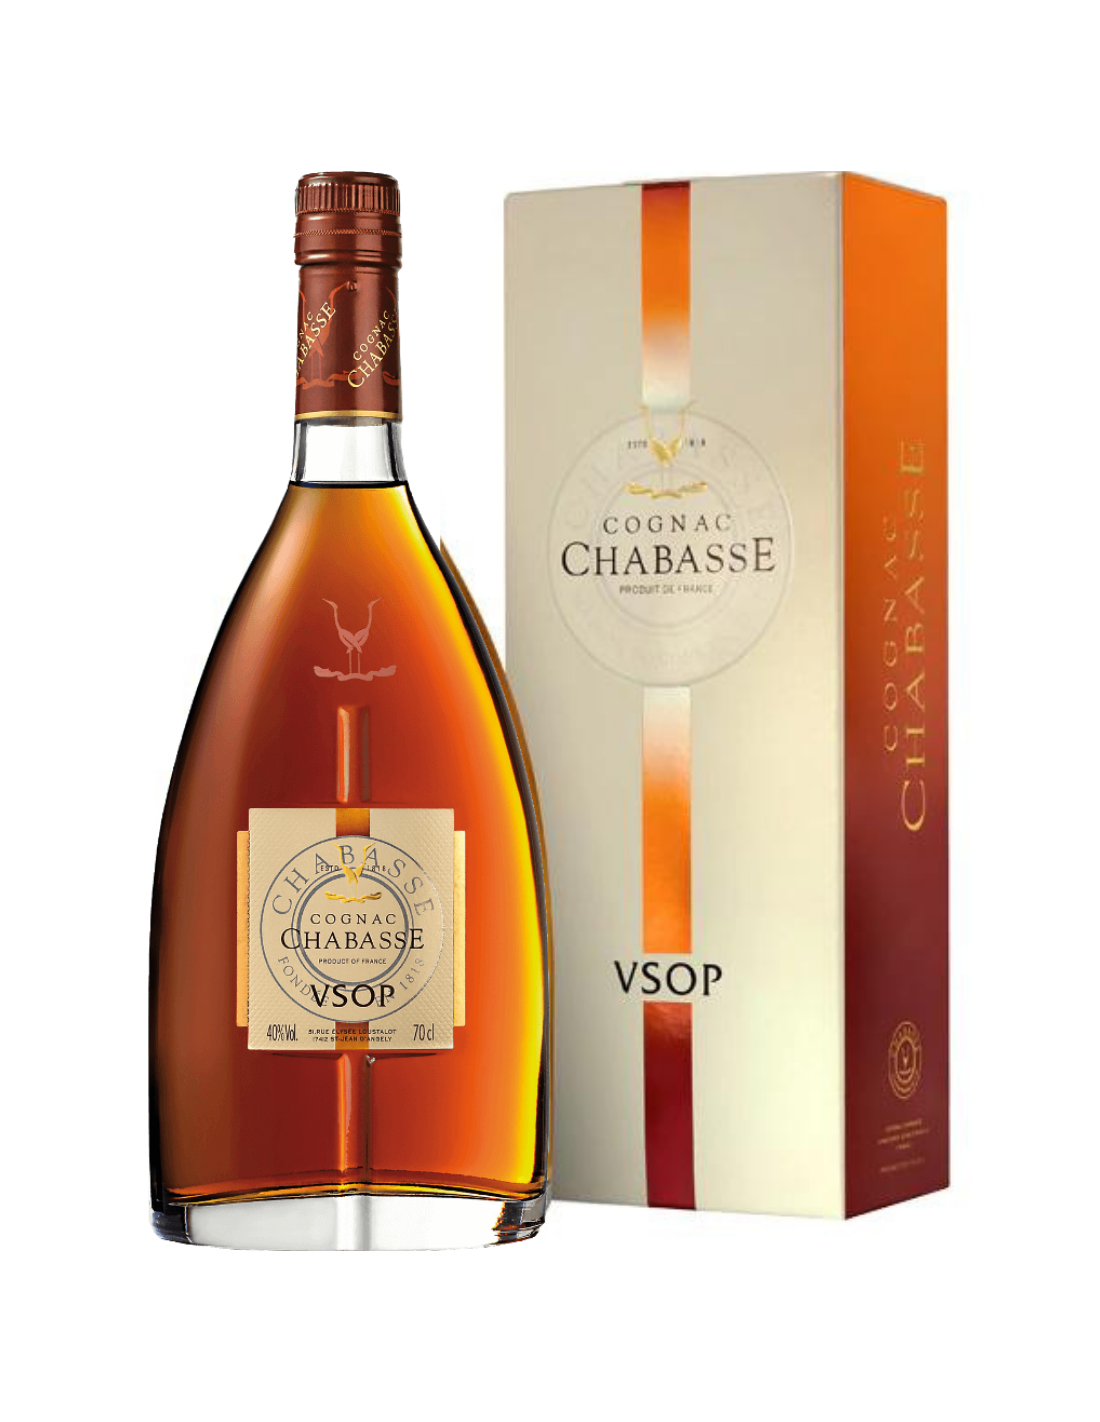 Coniac Chabasse VSOP, 40% alc., 0.7L, Franta alcooldiscount.ro